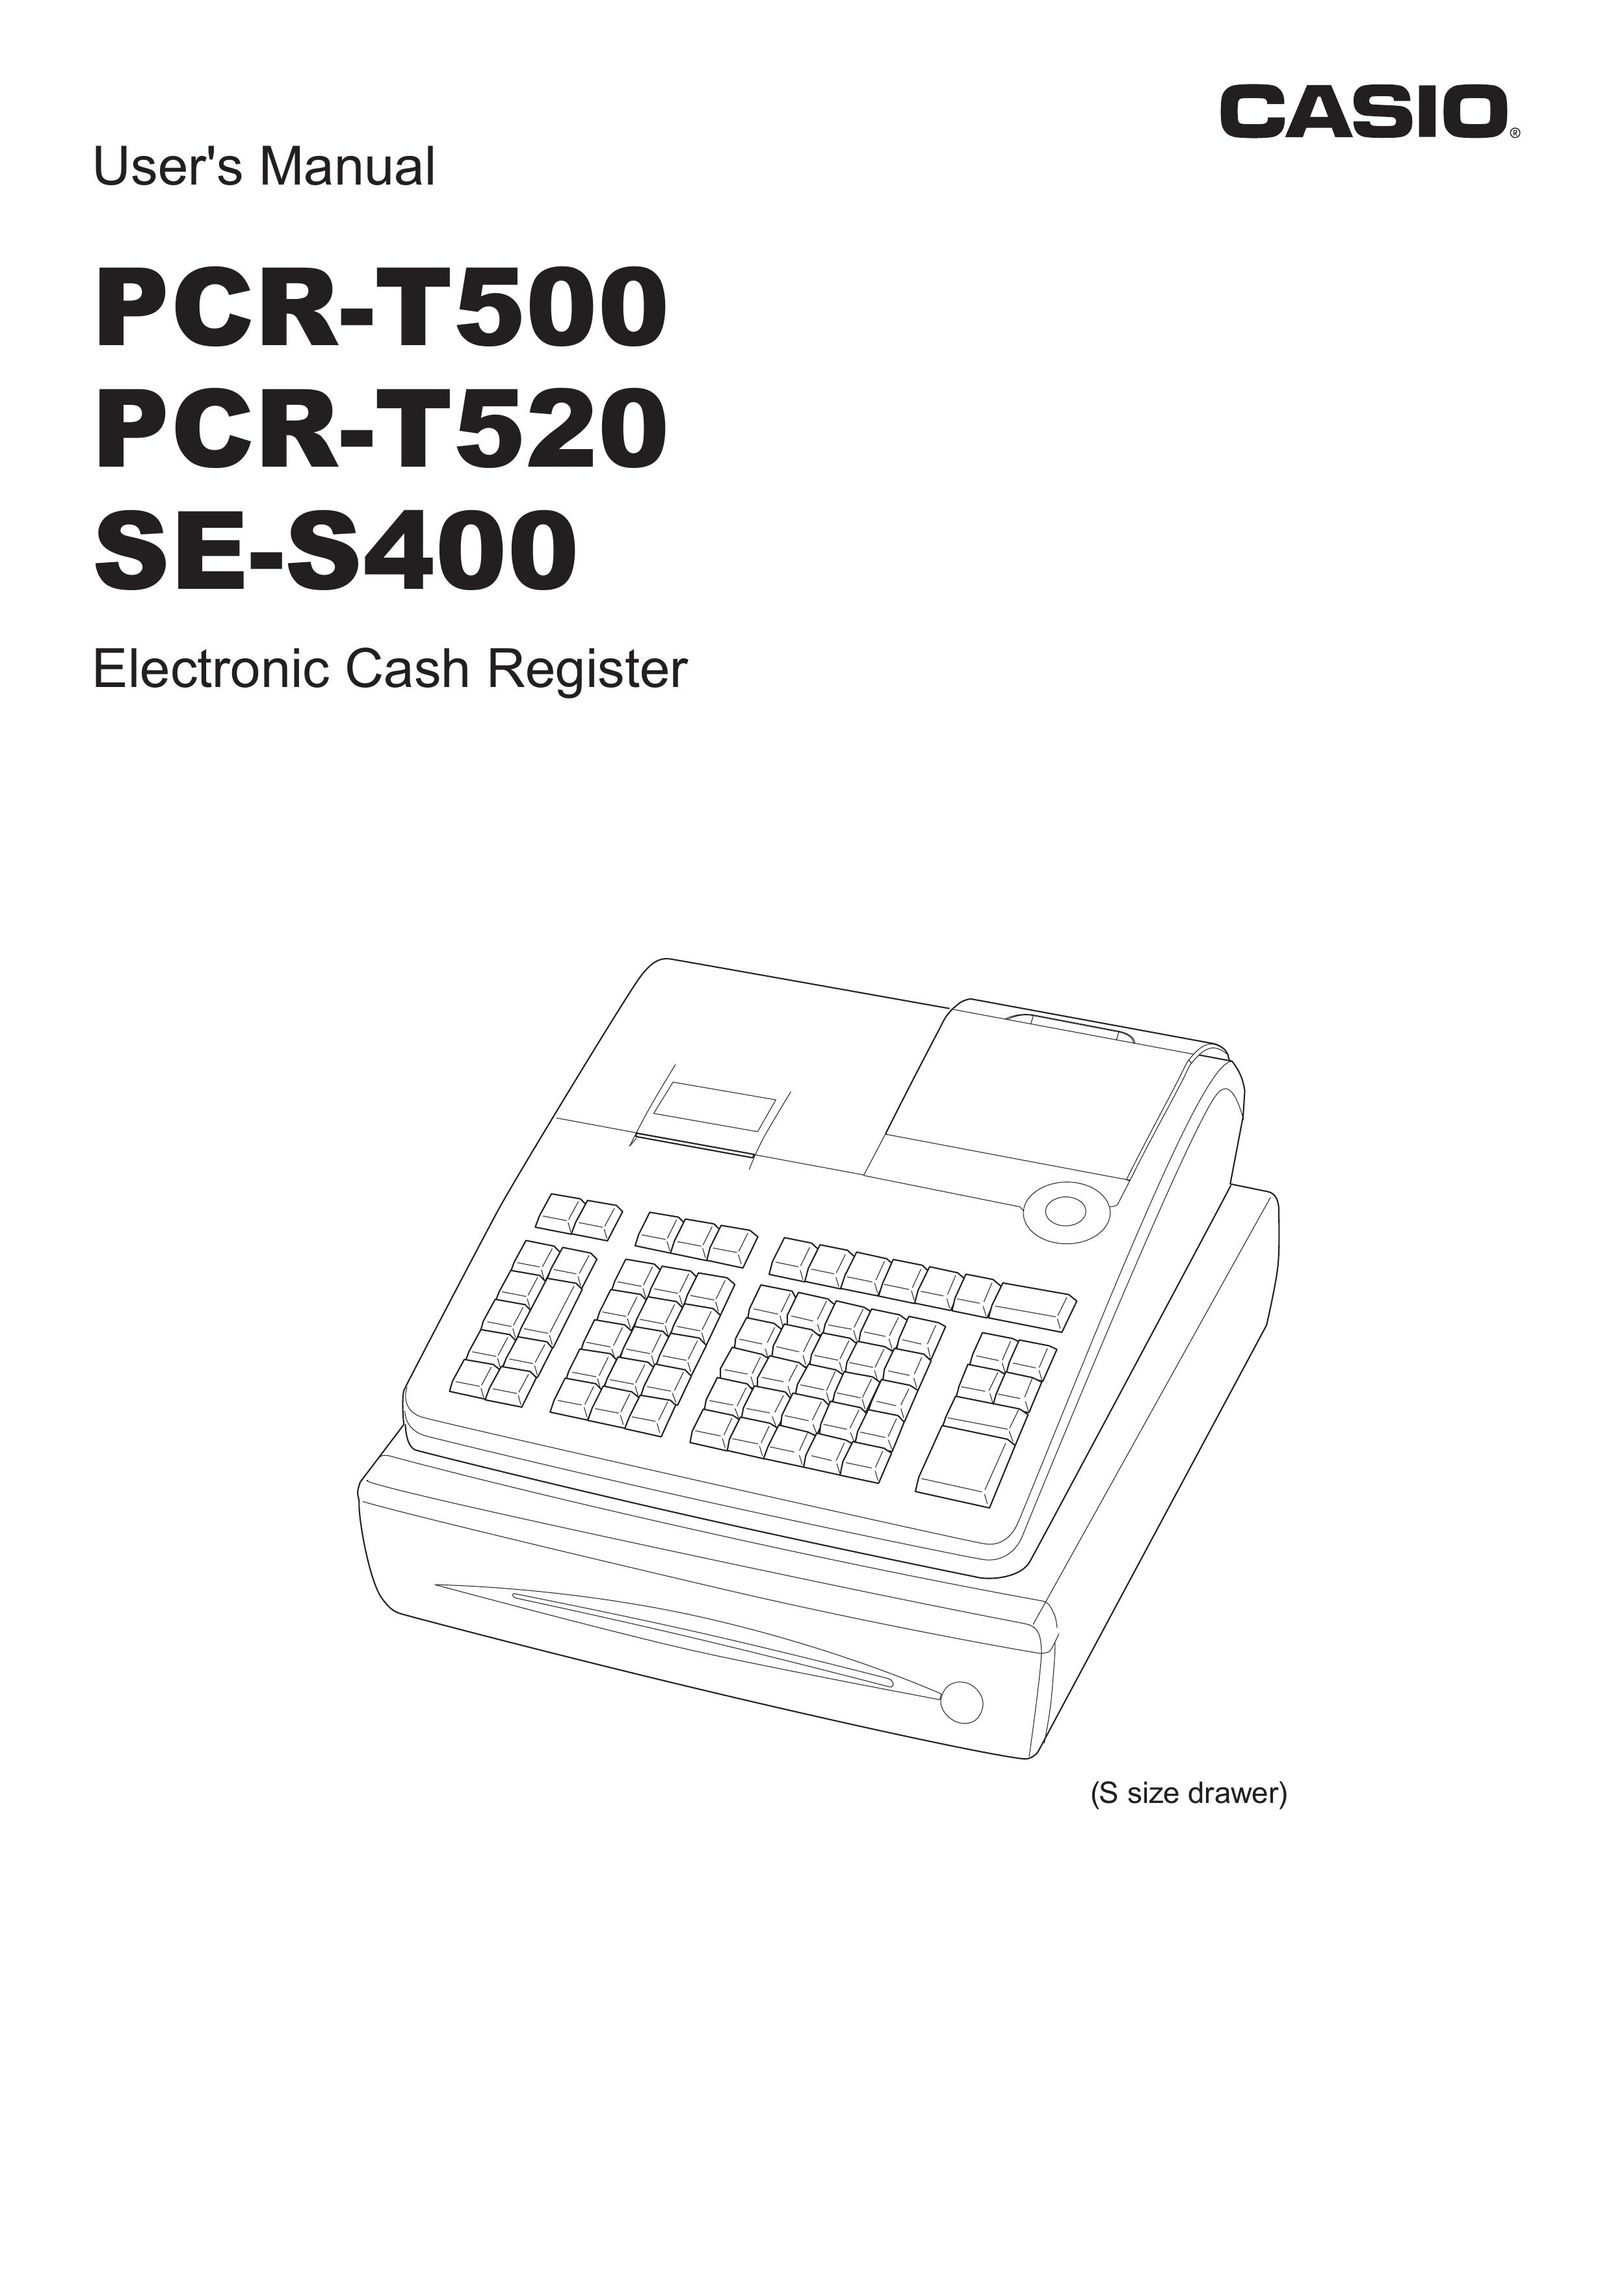 Casio PCR-T500 / PCR-T520 / SE-S400 Cash Register User Manual